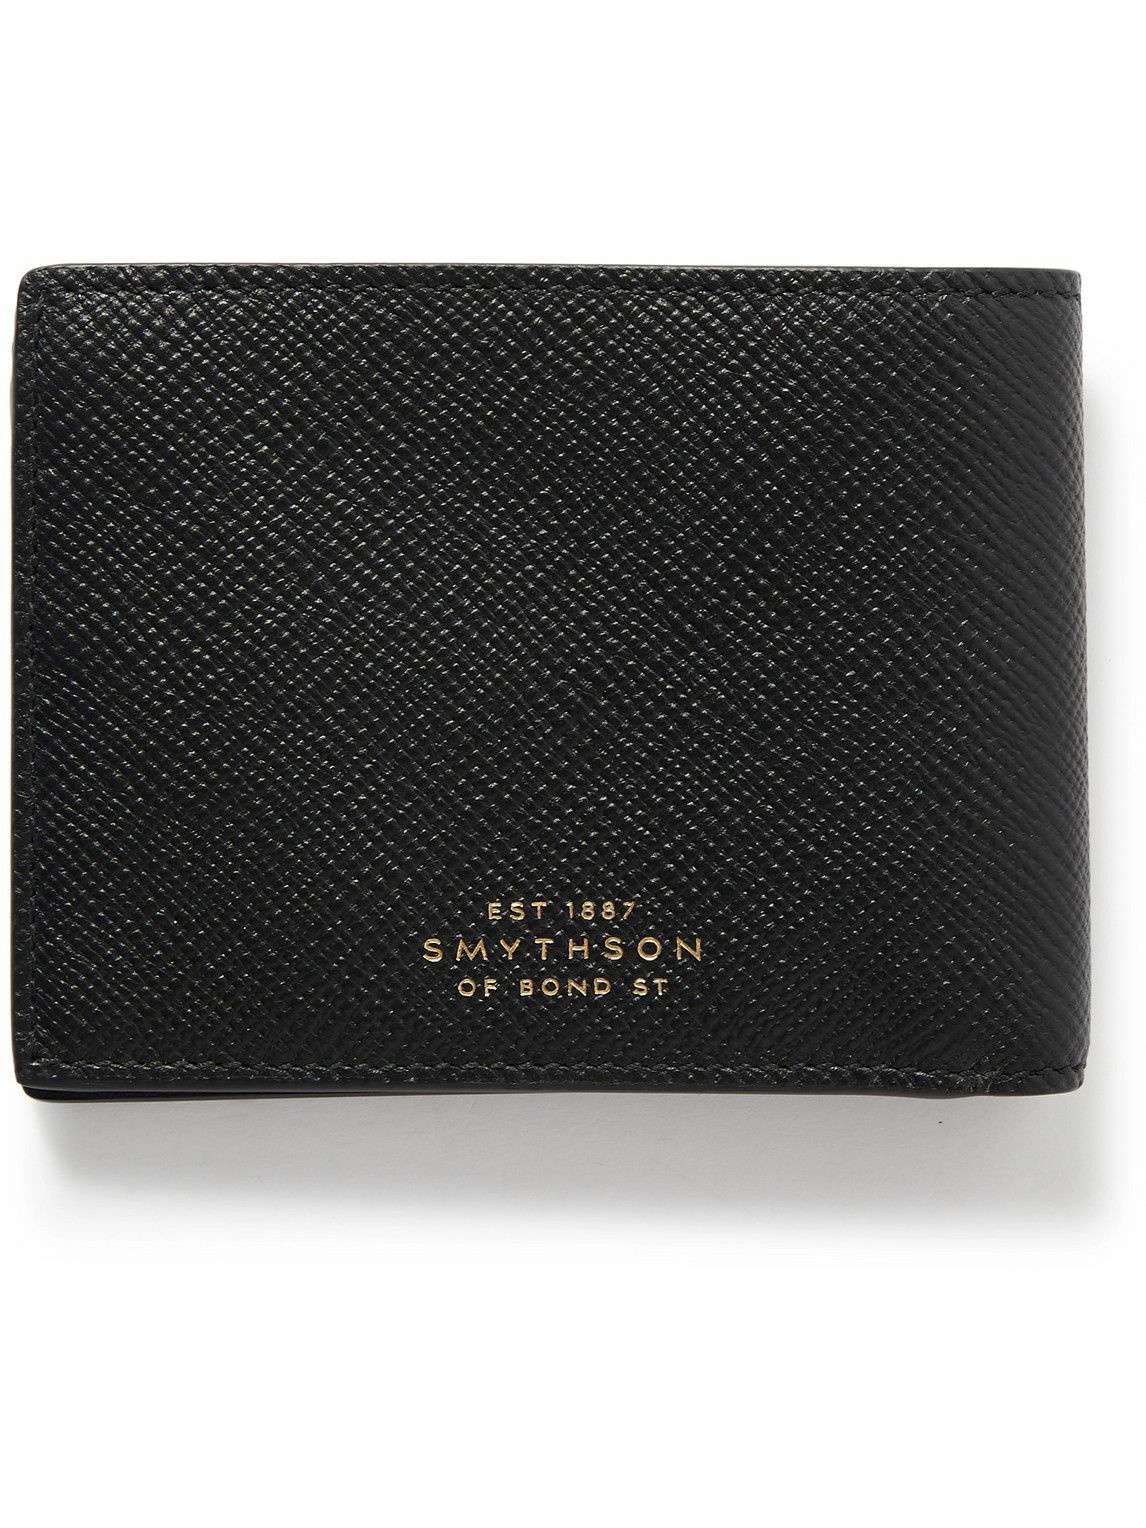 Smythson - Panama Cross-Grain Leather Billfold Wallet Smythson